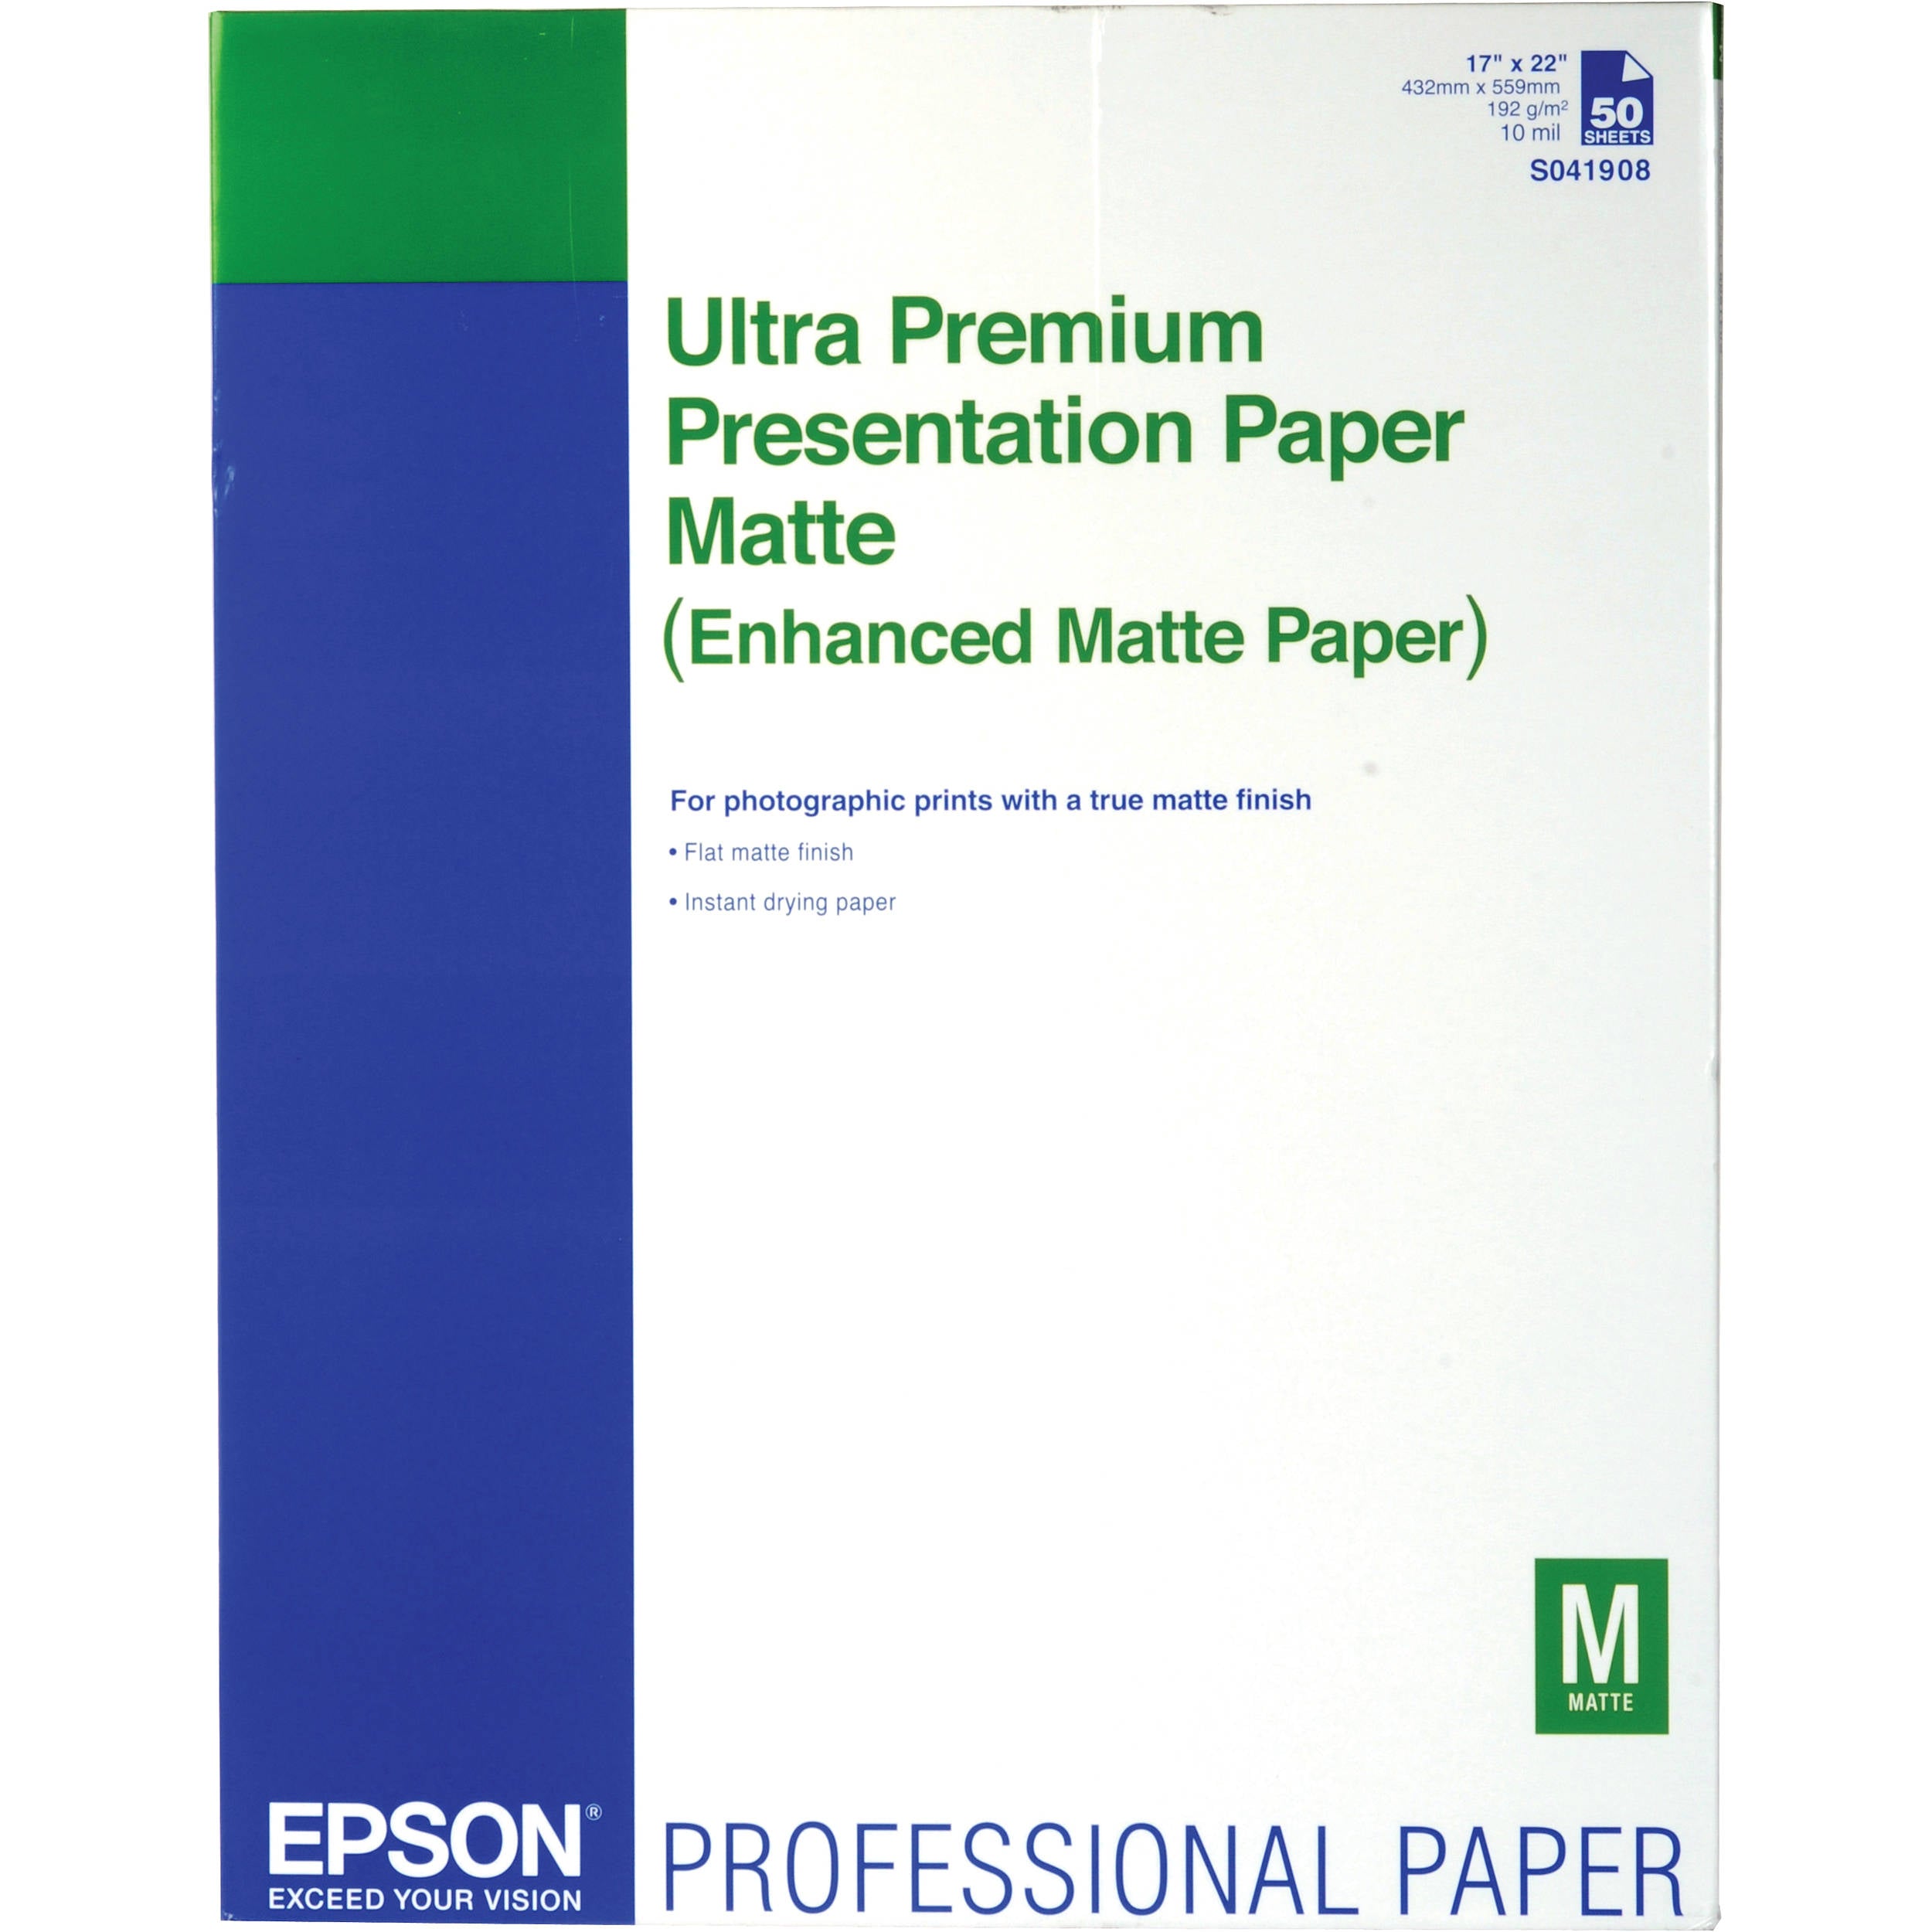 Epson Ultra Premium Presentation Paper Matte (17 x 22, 50 Sheets) – Image  Pro International